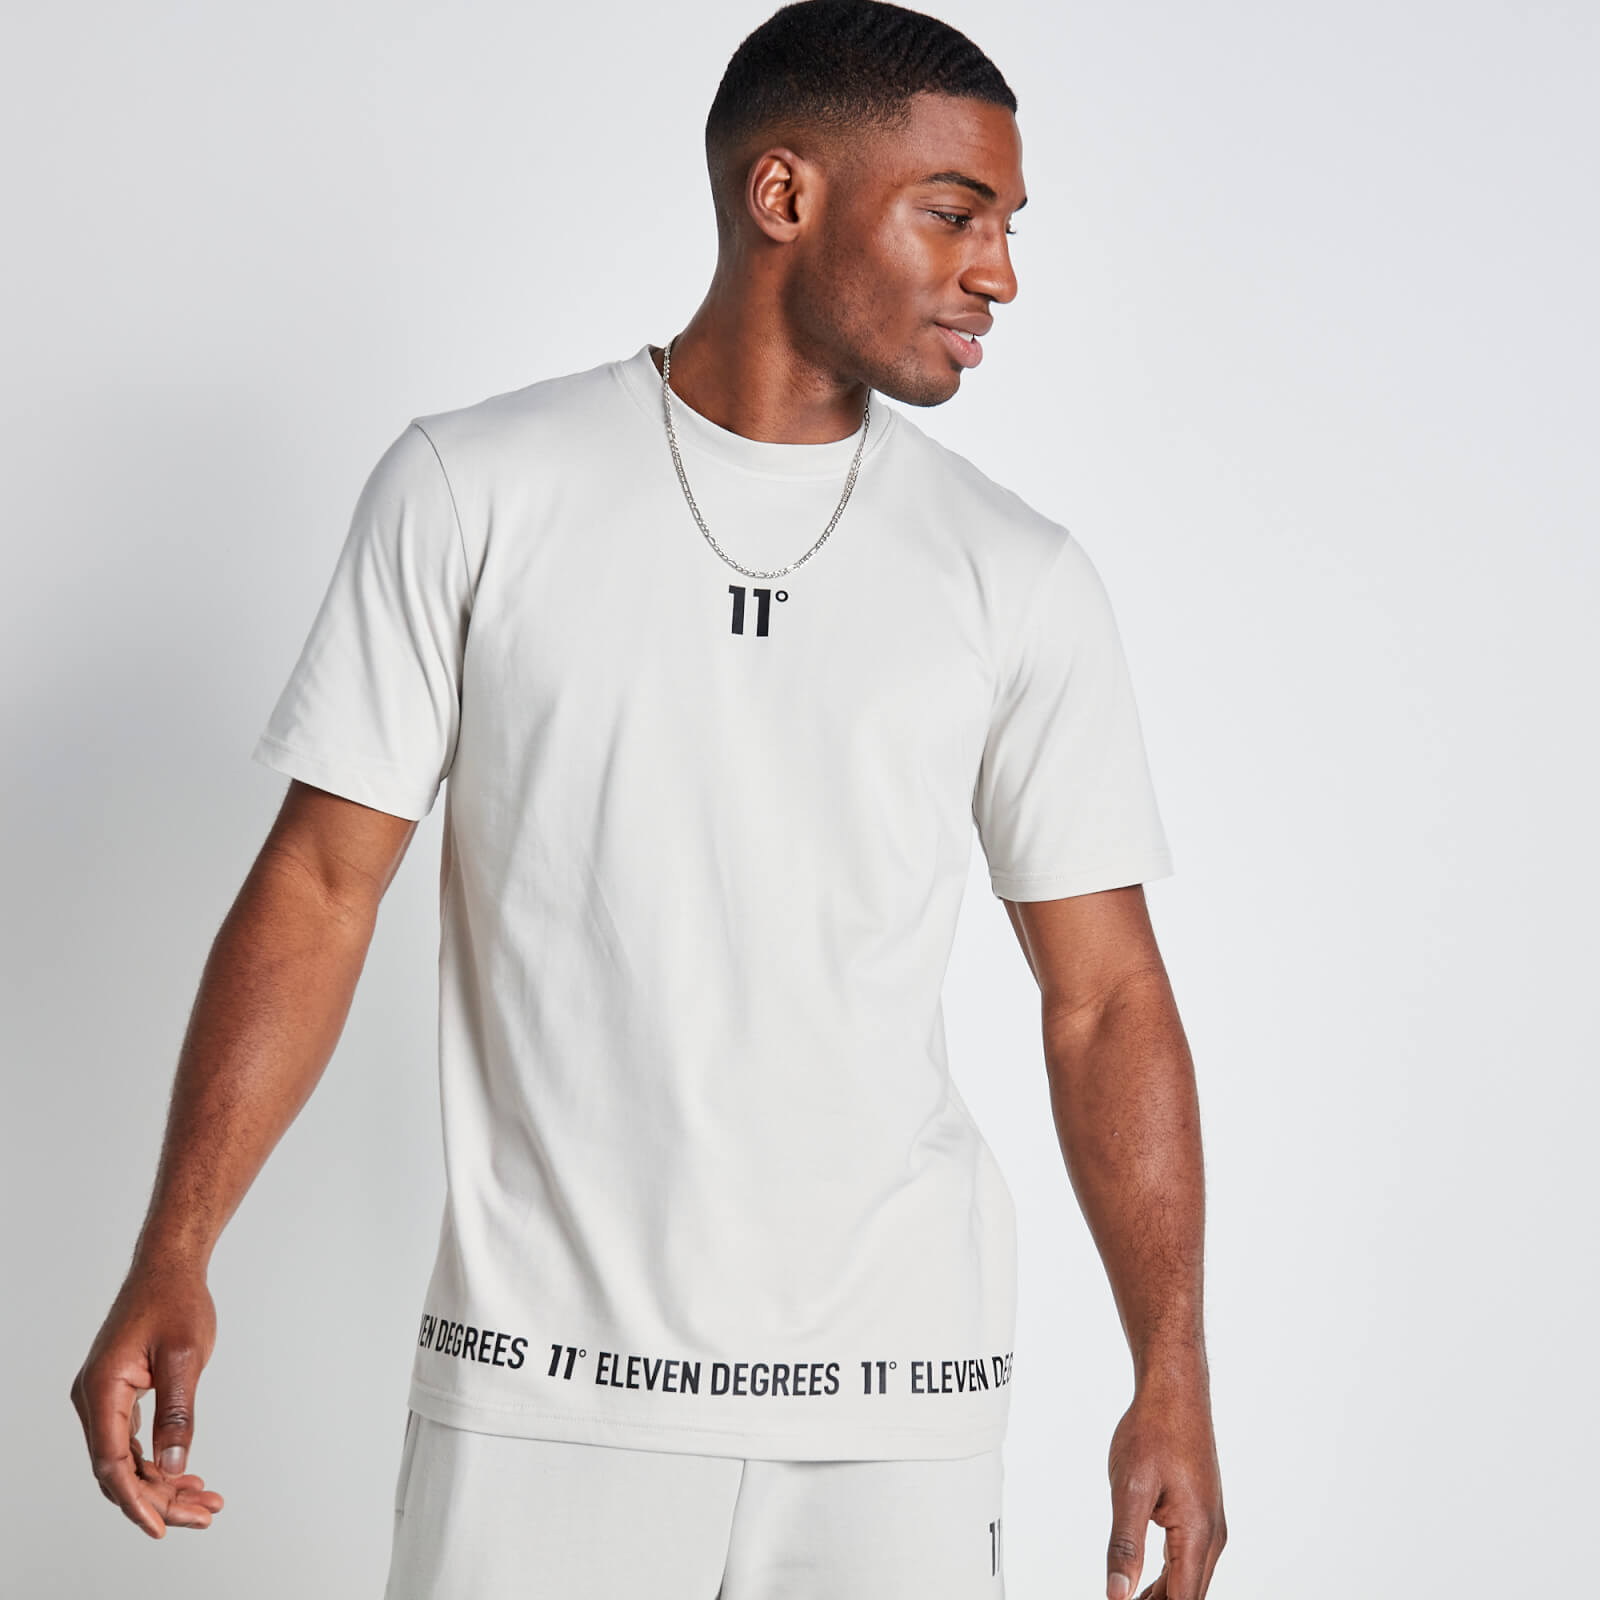 Hem Print T-Shirt - Vapour Grey - XS from 11 Degrees